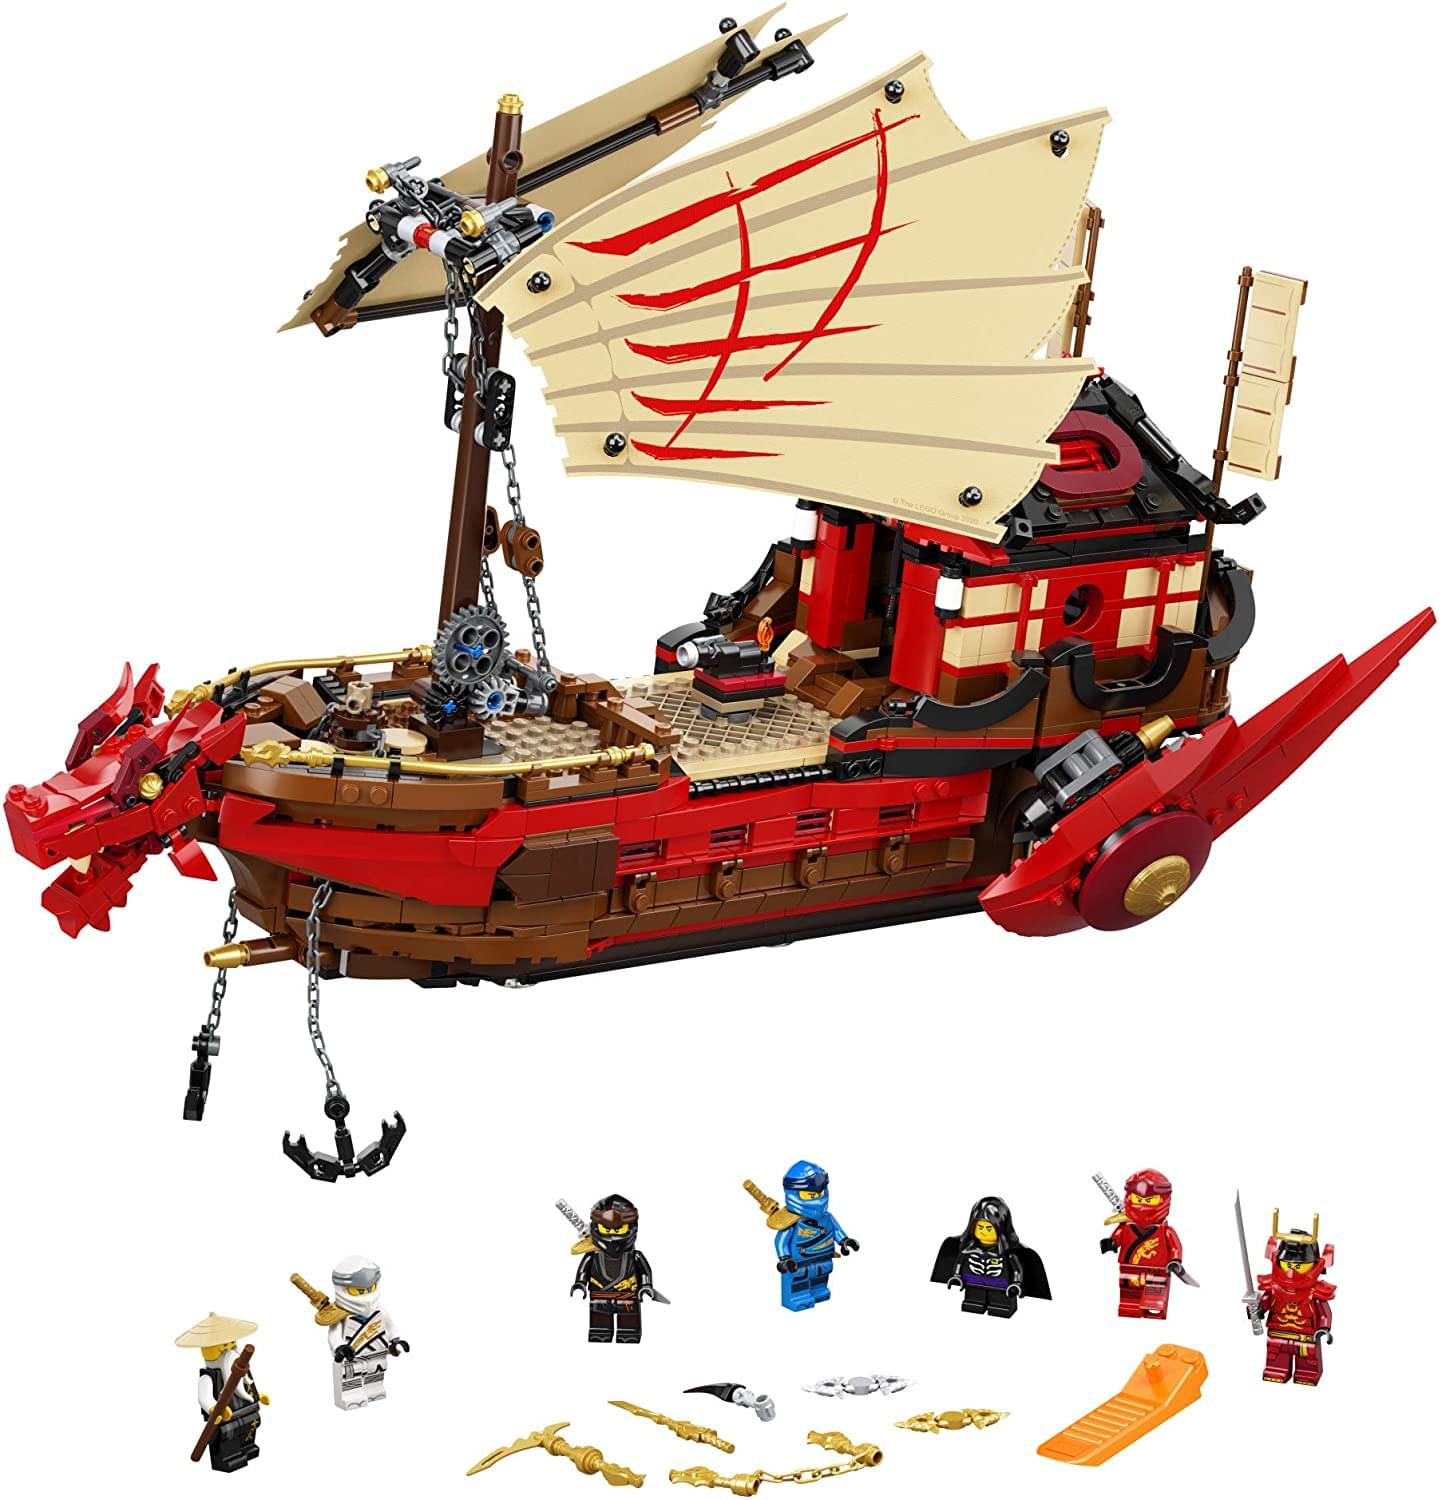 LEGO Ninjago 71705 Destinys Bounty 1781 Piece Building Set